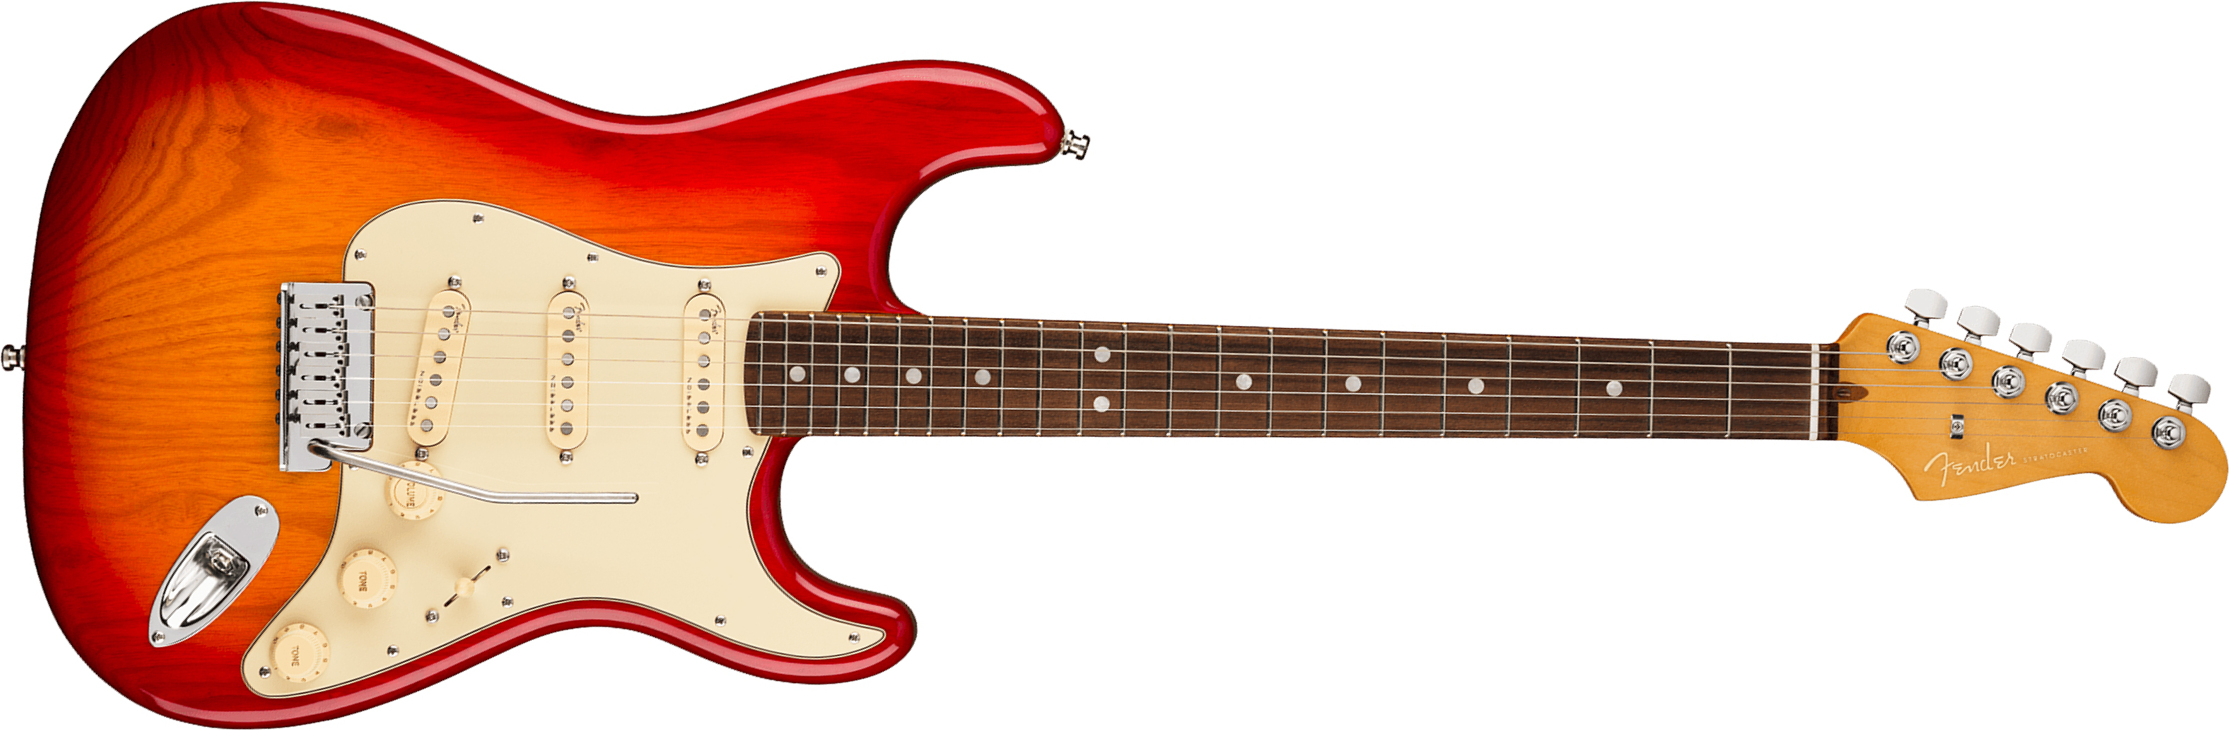 Fender Strat American Ultra Hss 2019 Usa Mn - Plasma Red Burst - Guitare Électrique Forme Str - Main picture